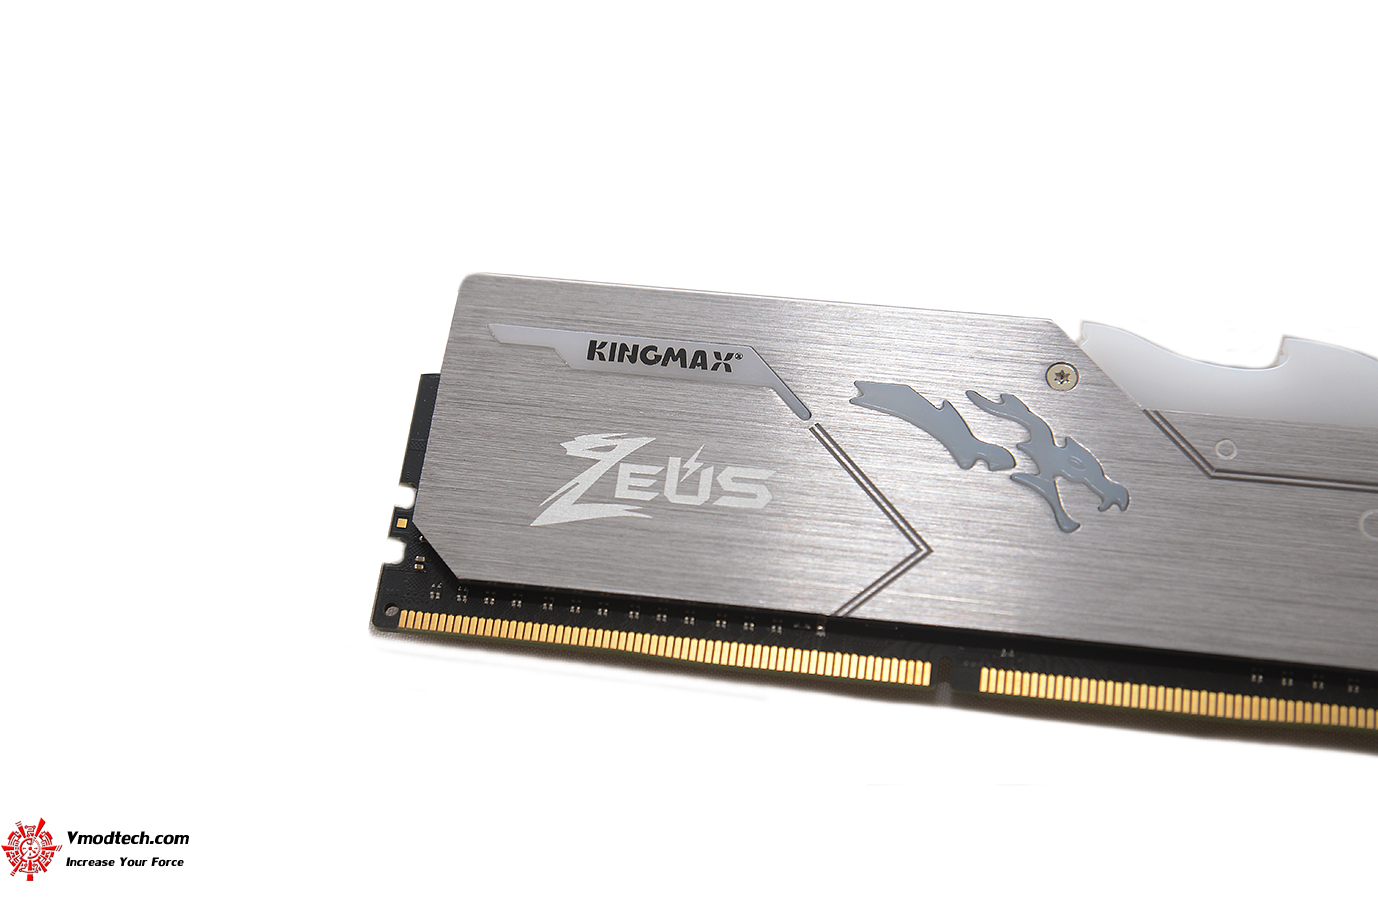 dsc 5417 Kingmax Zeus Dragon DDR4 RGB GAMING RAM 3200Mhz Review